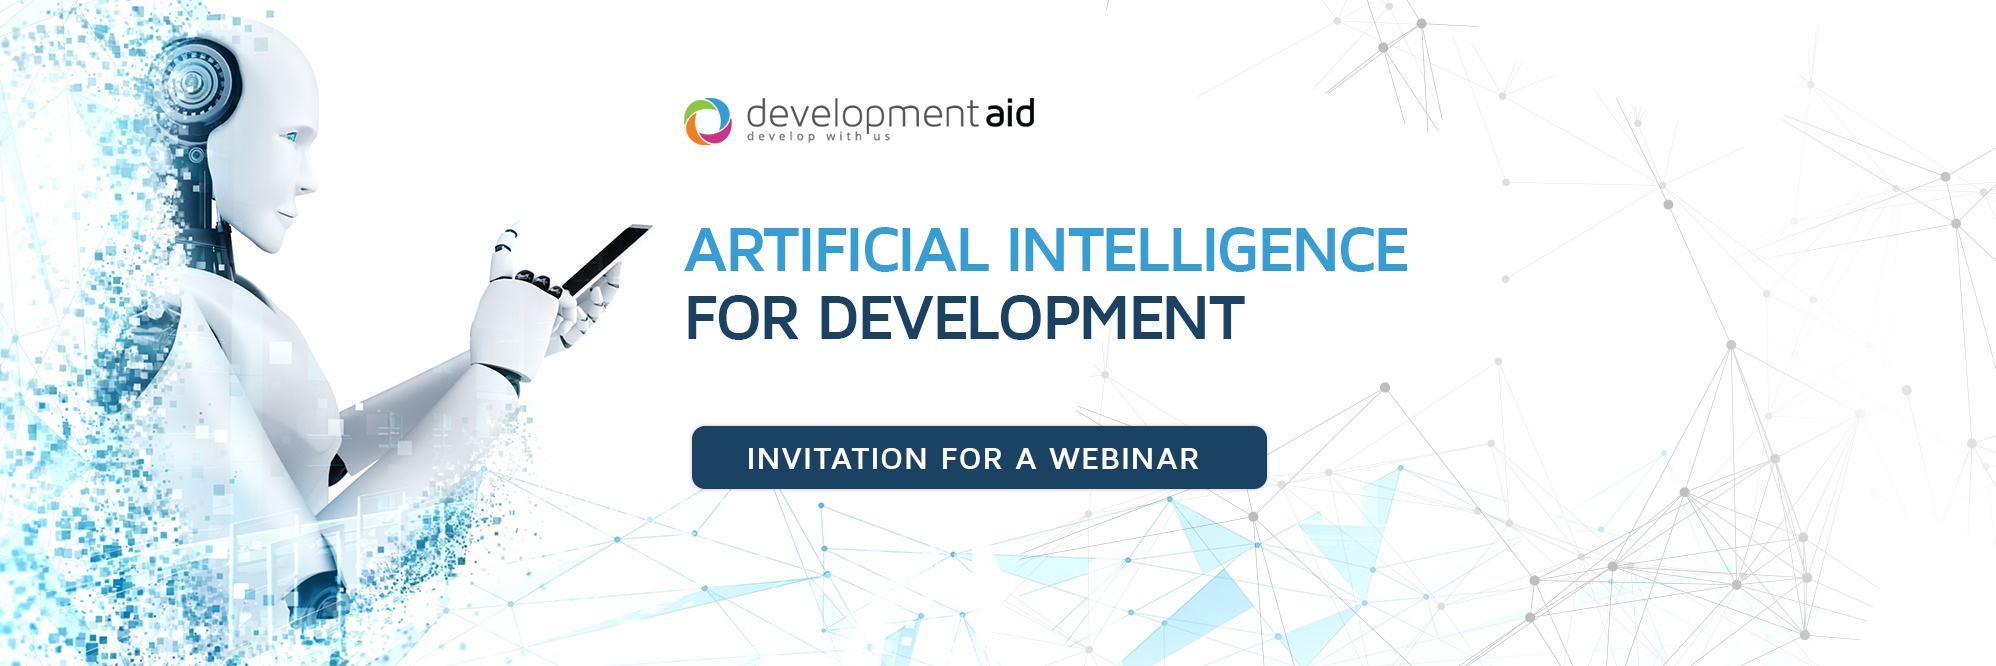 Artificial Intelligence for Development - Invitation for a Webinar